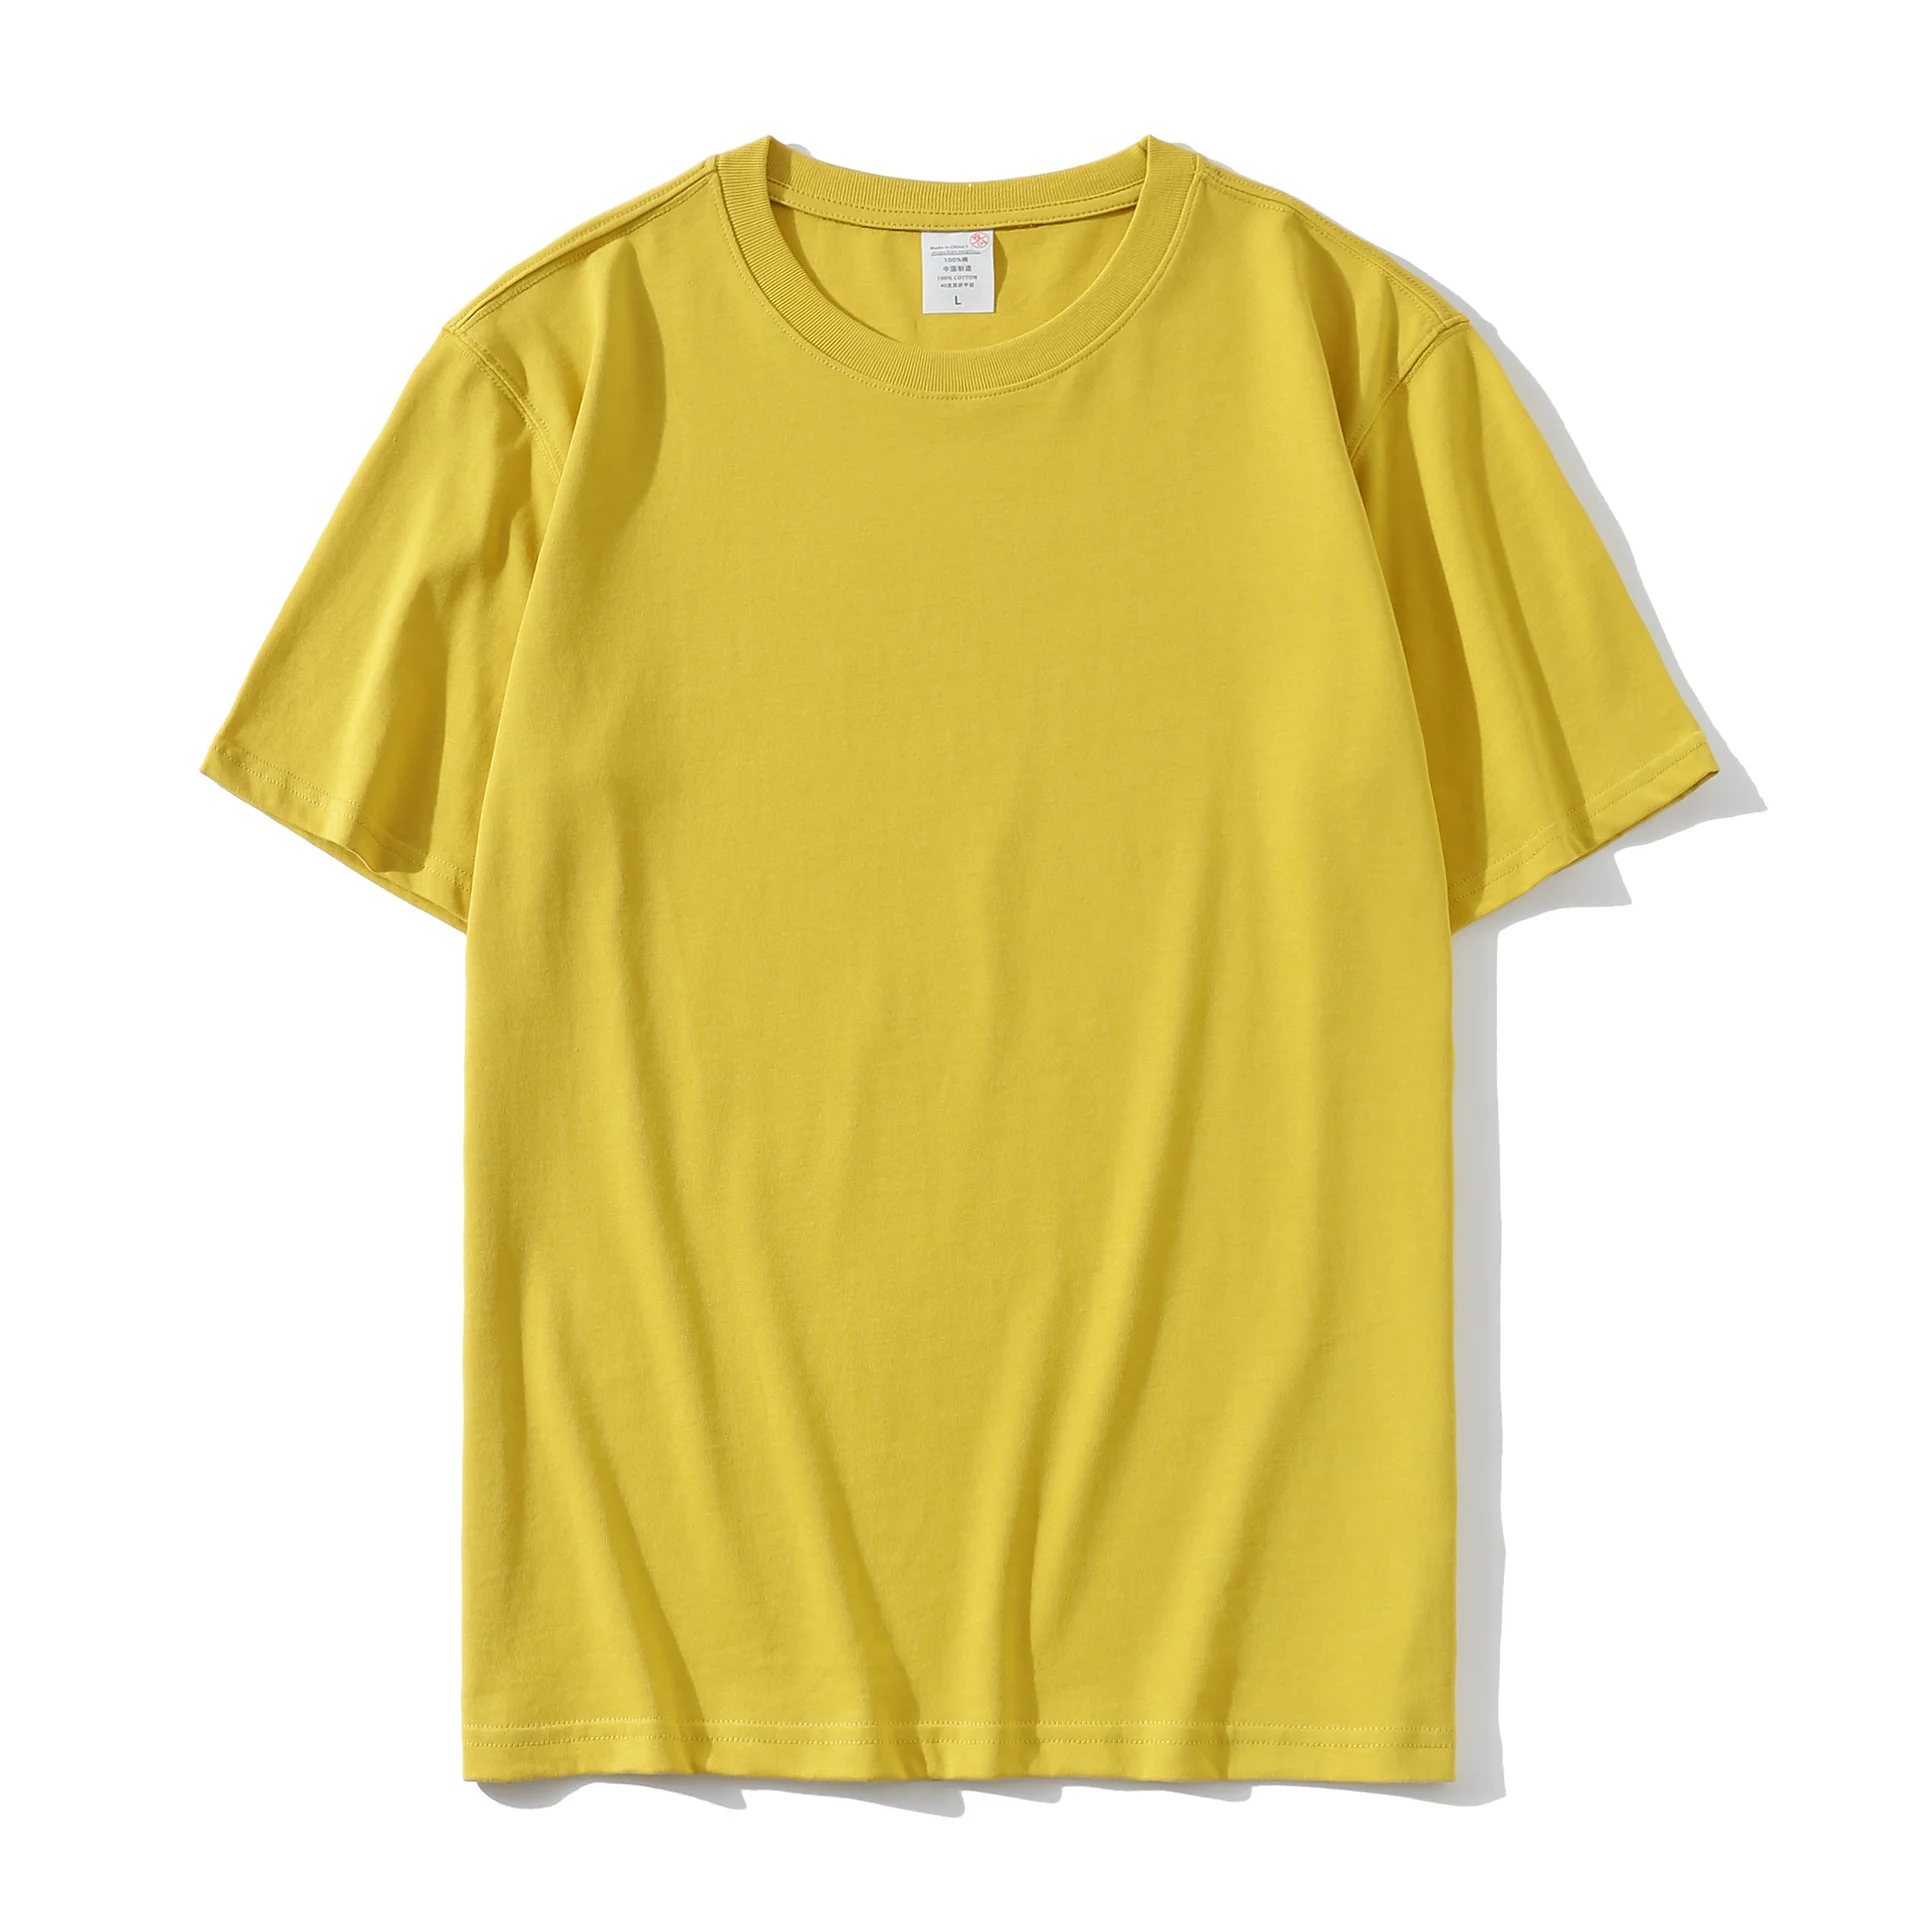 Yellow Blank T Shirts Exporter In Bangladesh